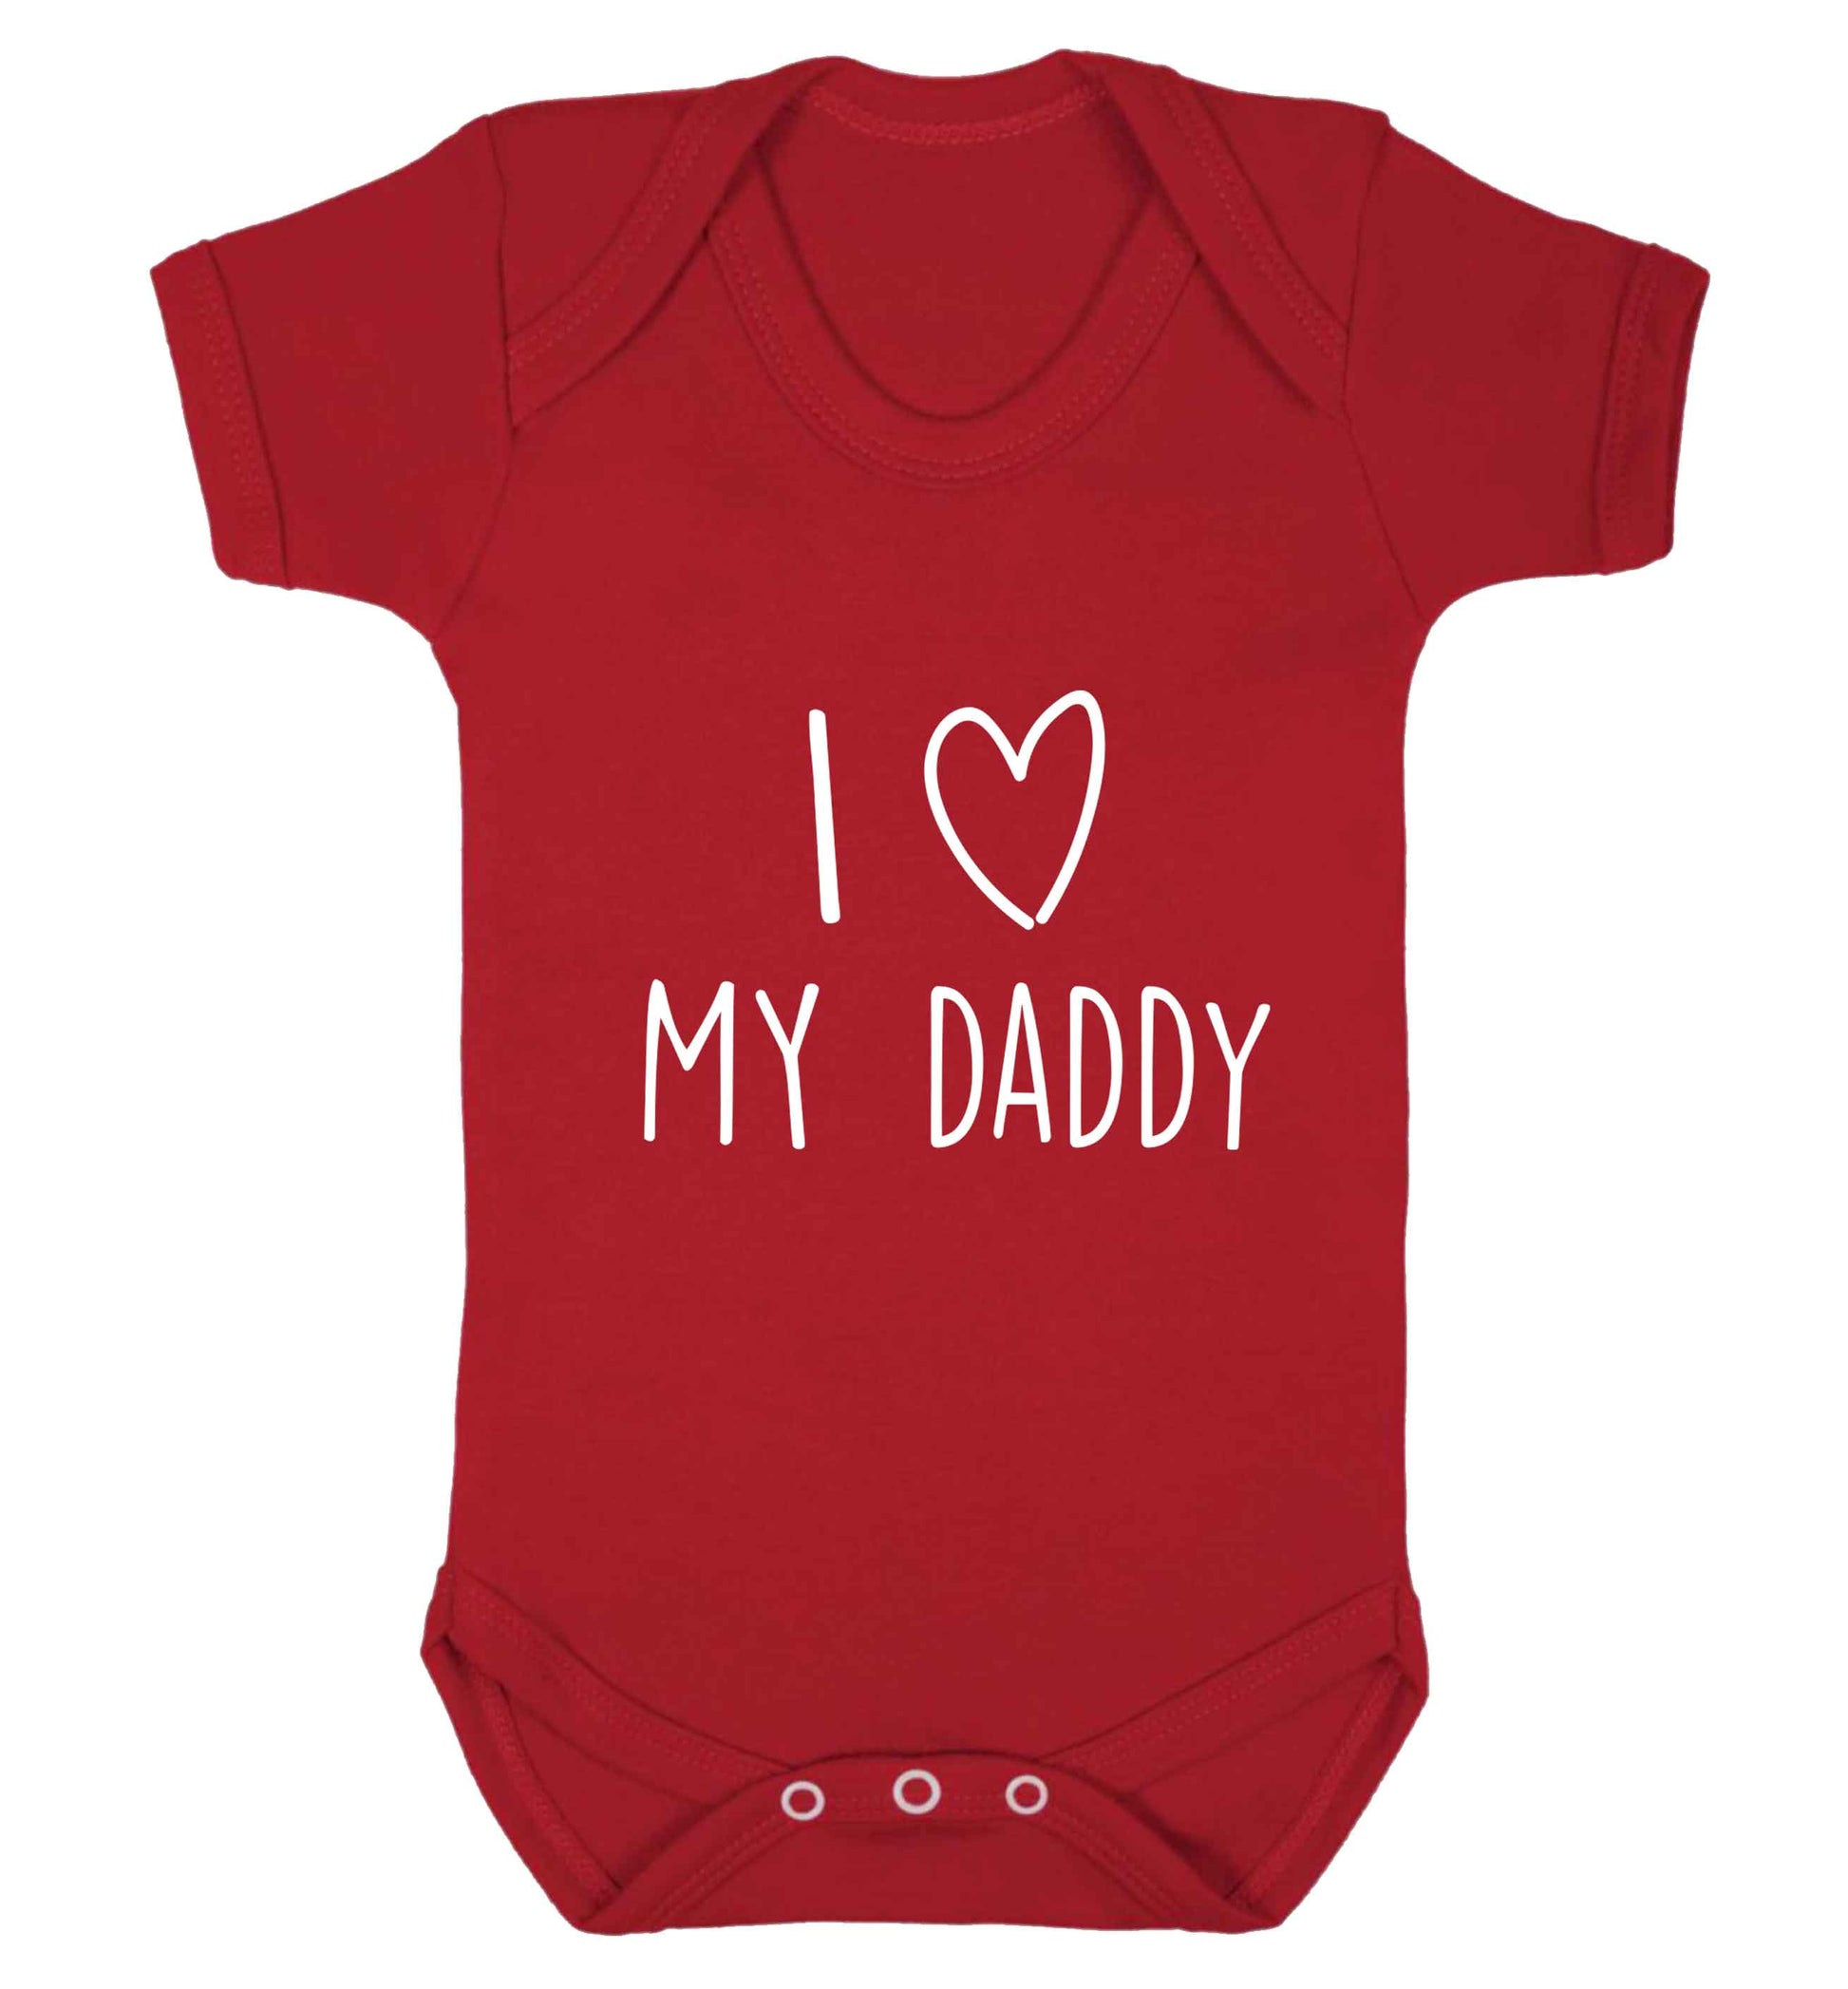 I love my daddy baby vest red 18-24 months